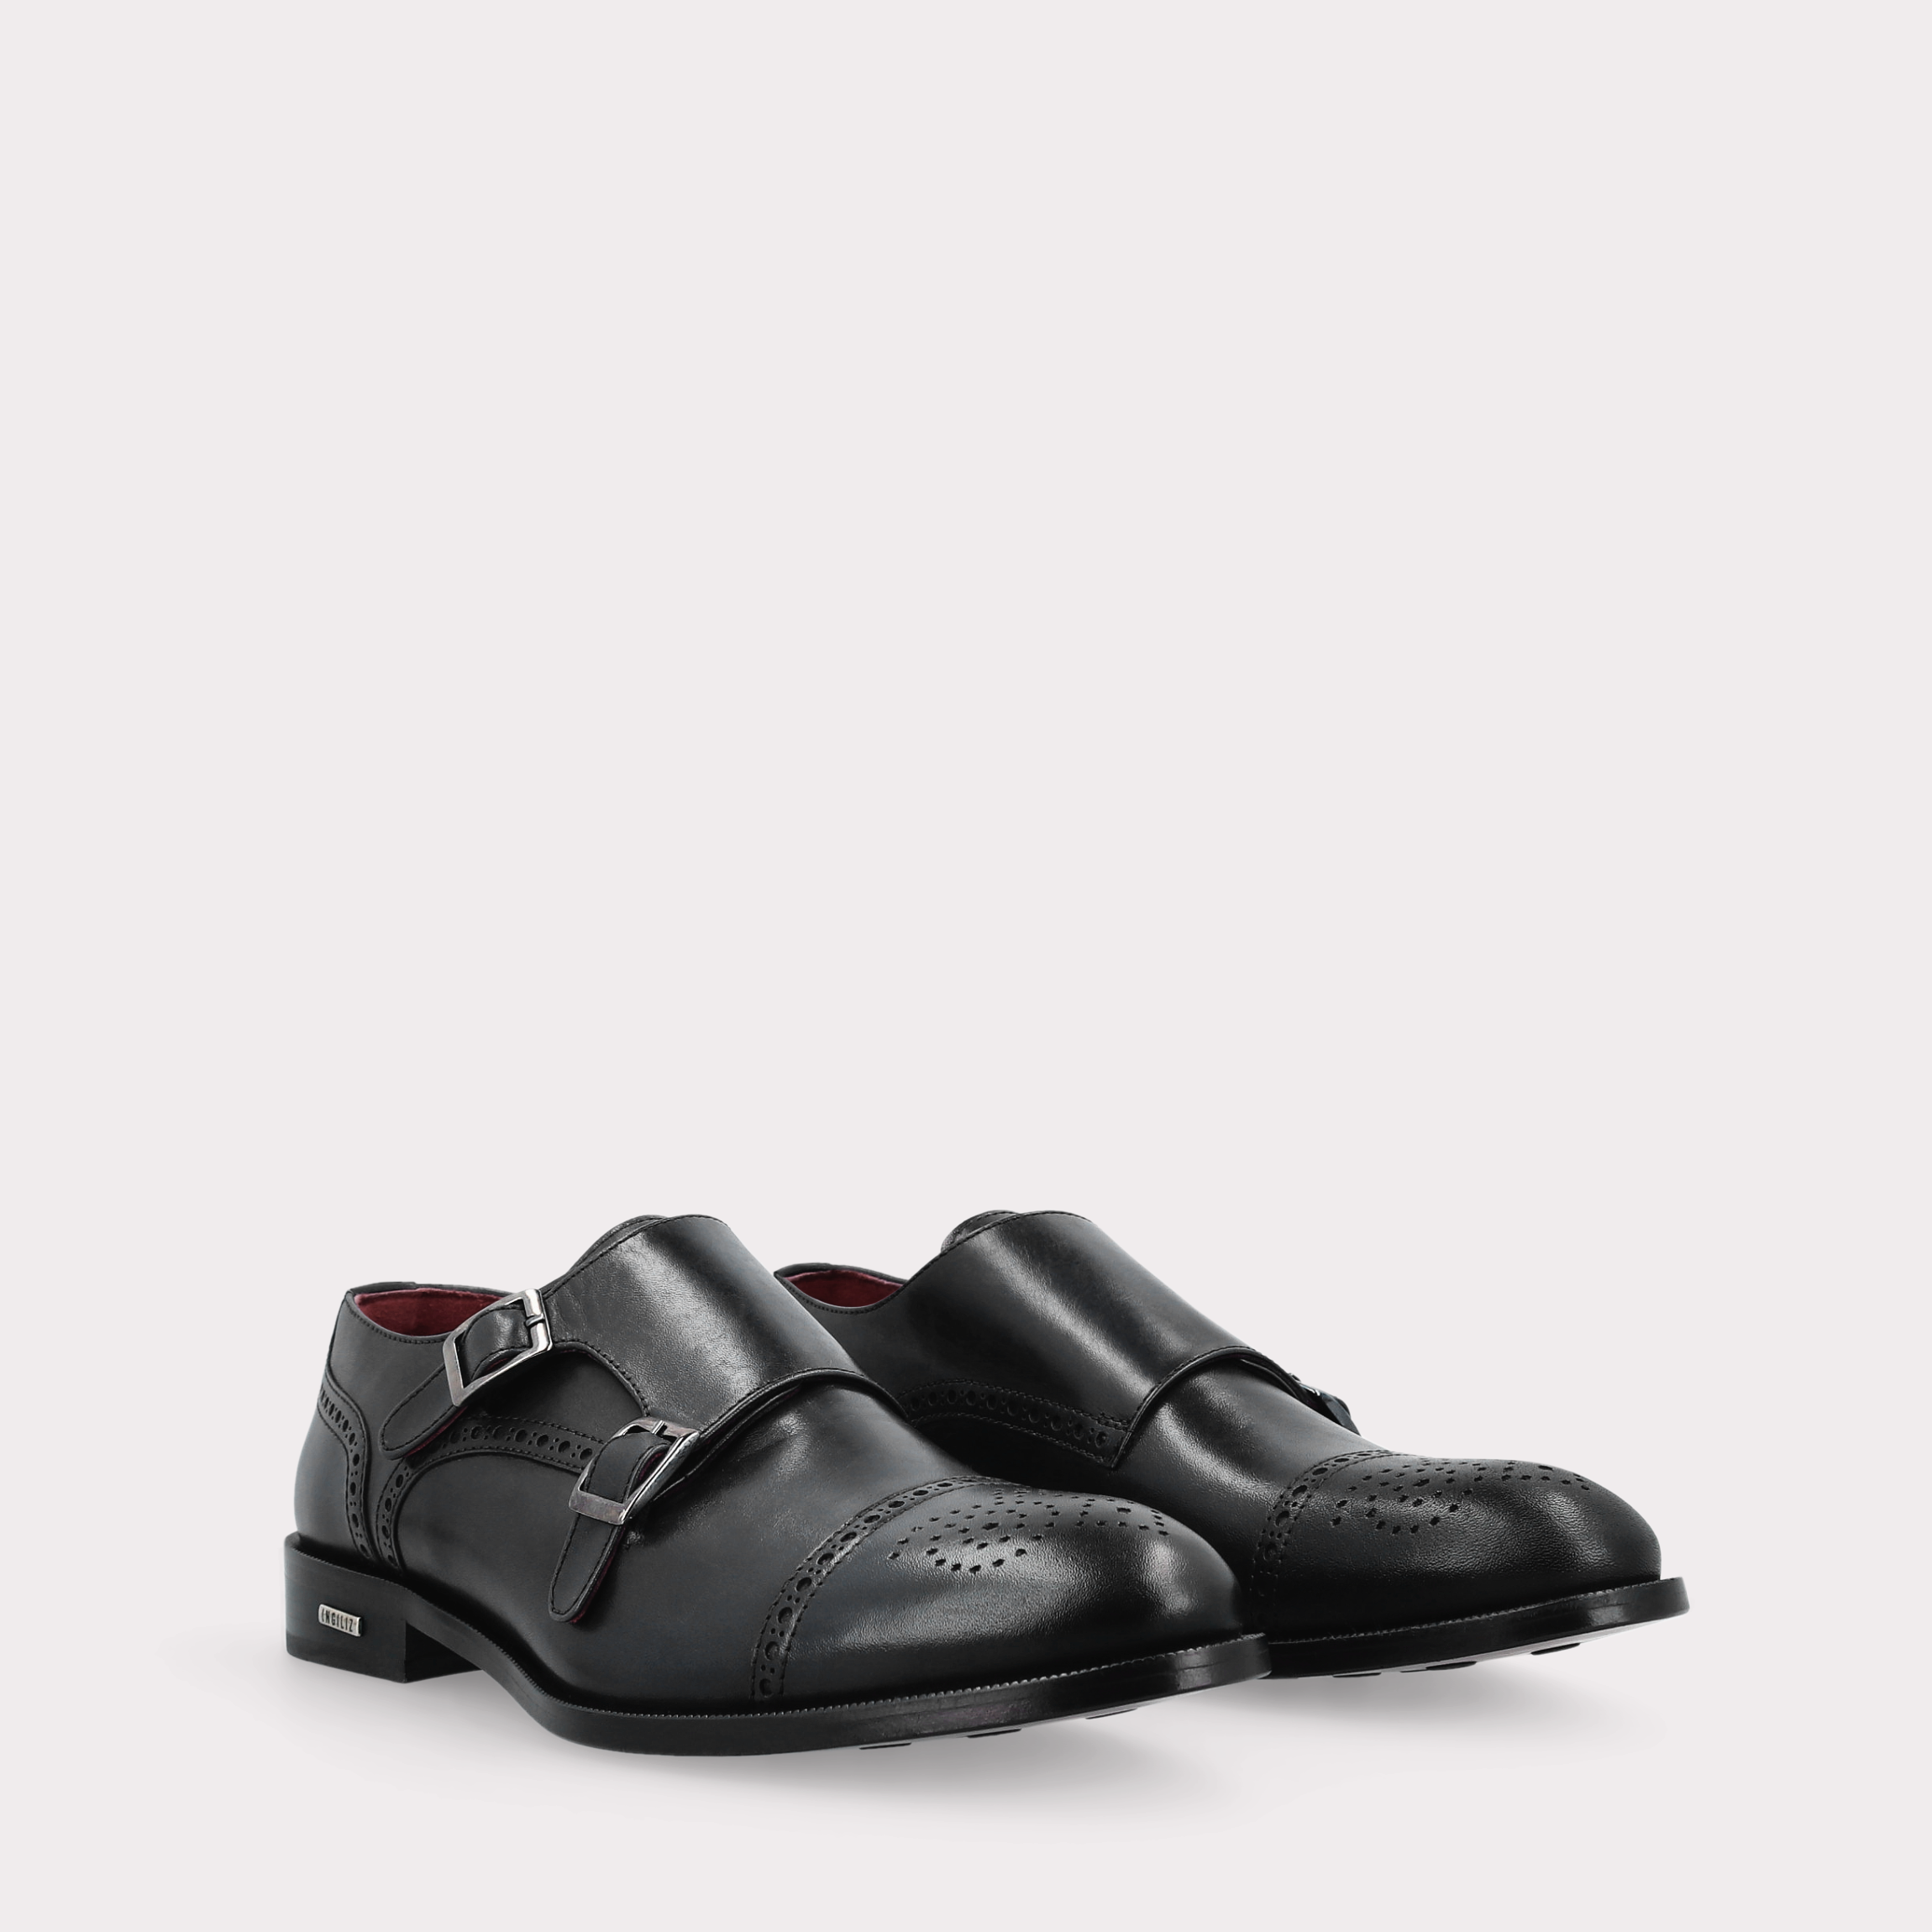 TRENTO 01 black leather monk strap shoes